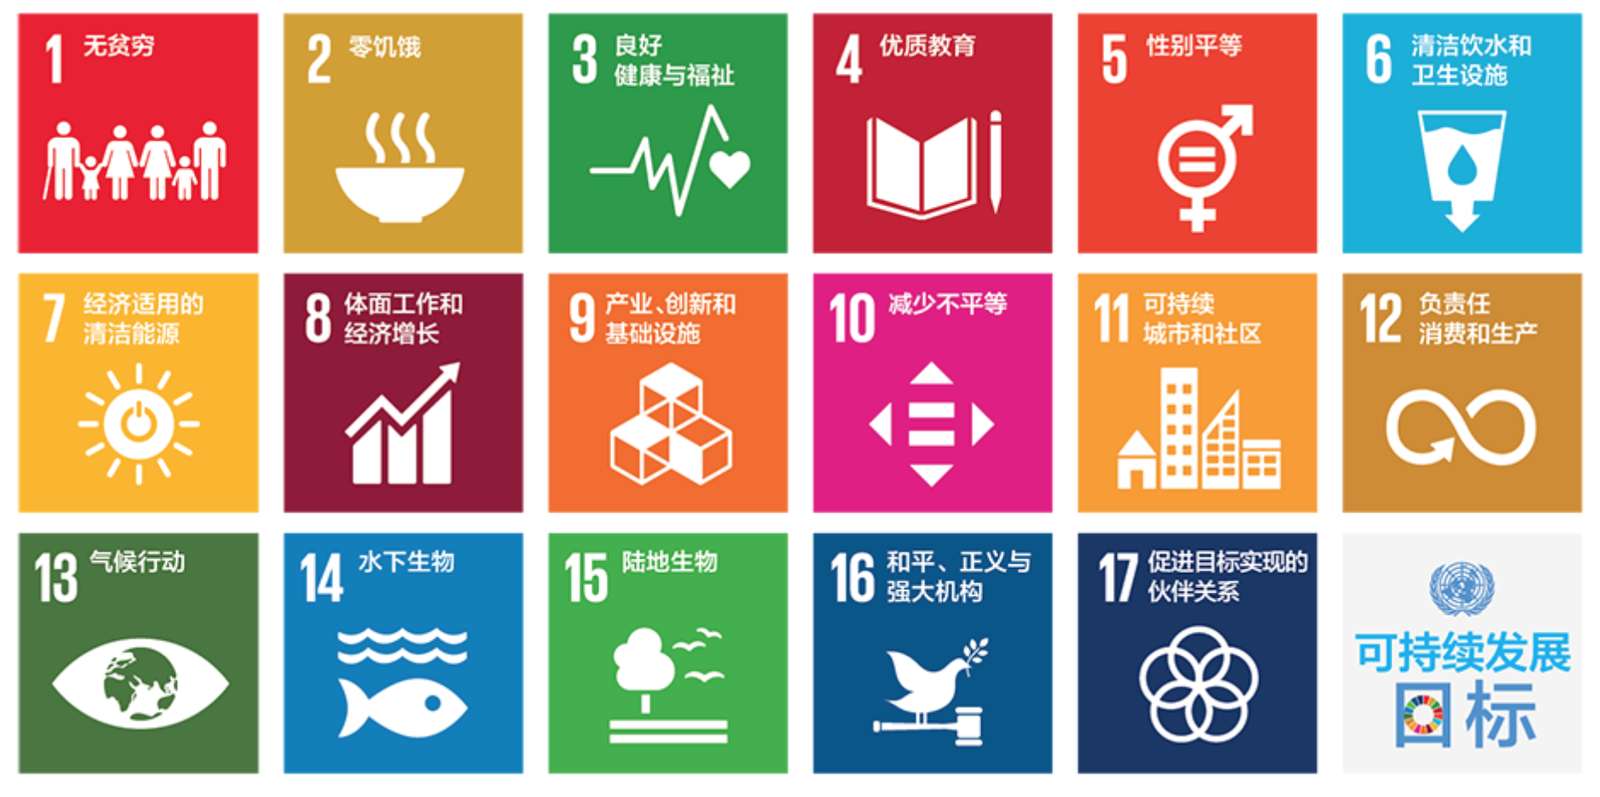 SDG-puzzel online puzzel